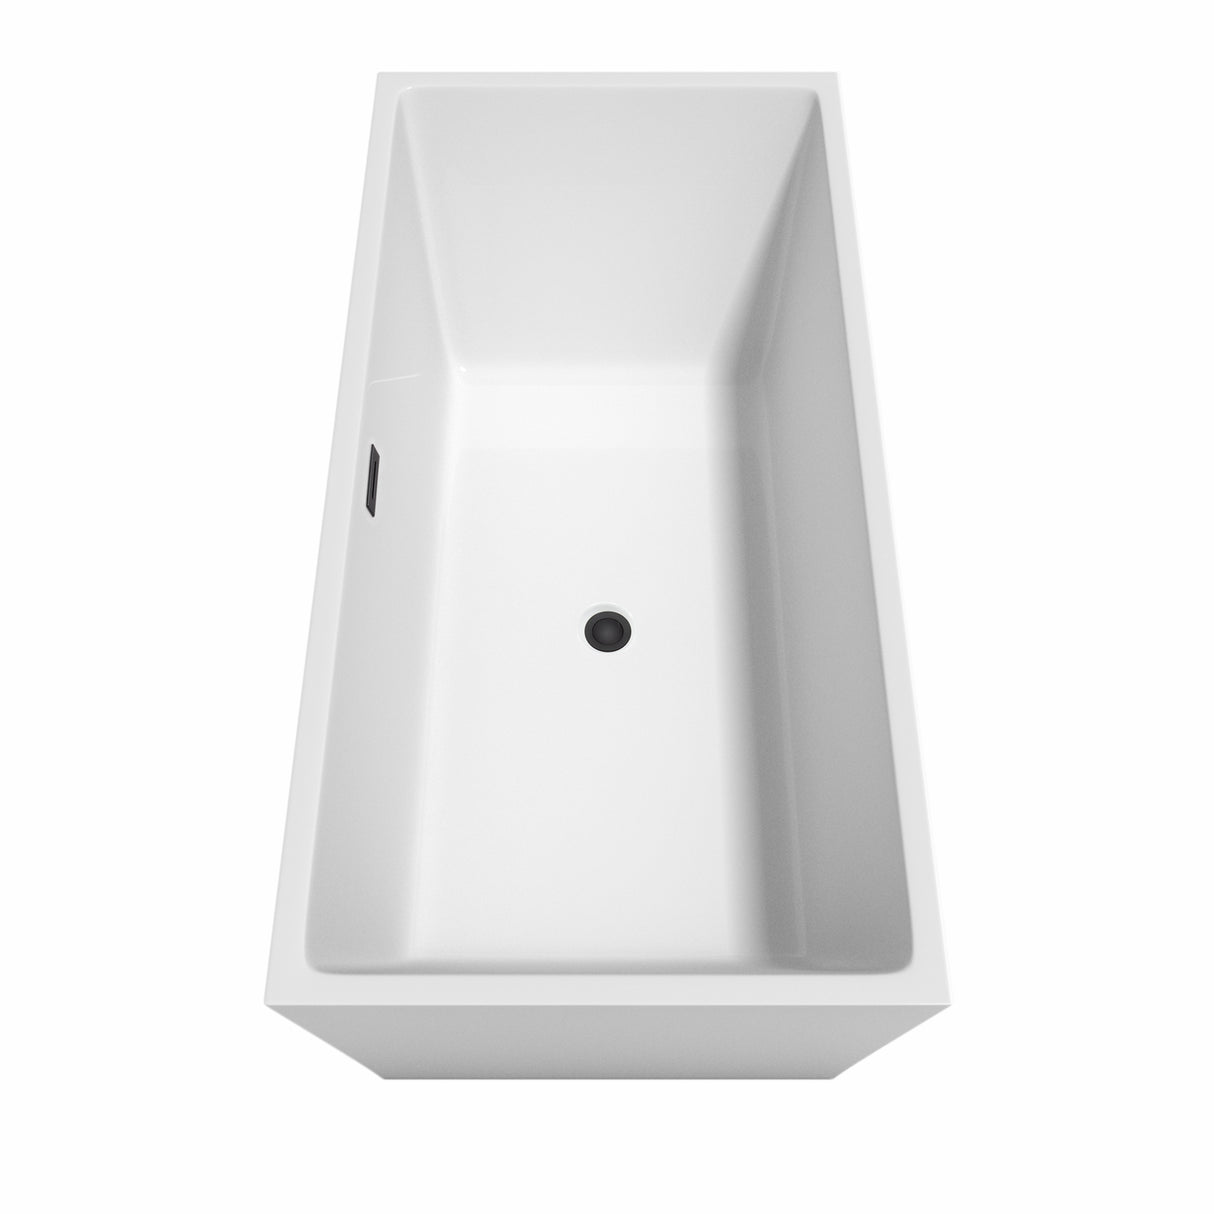 Sara 67 Inch Freestanding Bathtub in White with Matte Black Drain and Overflow Trim